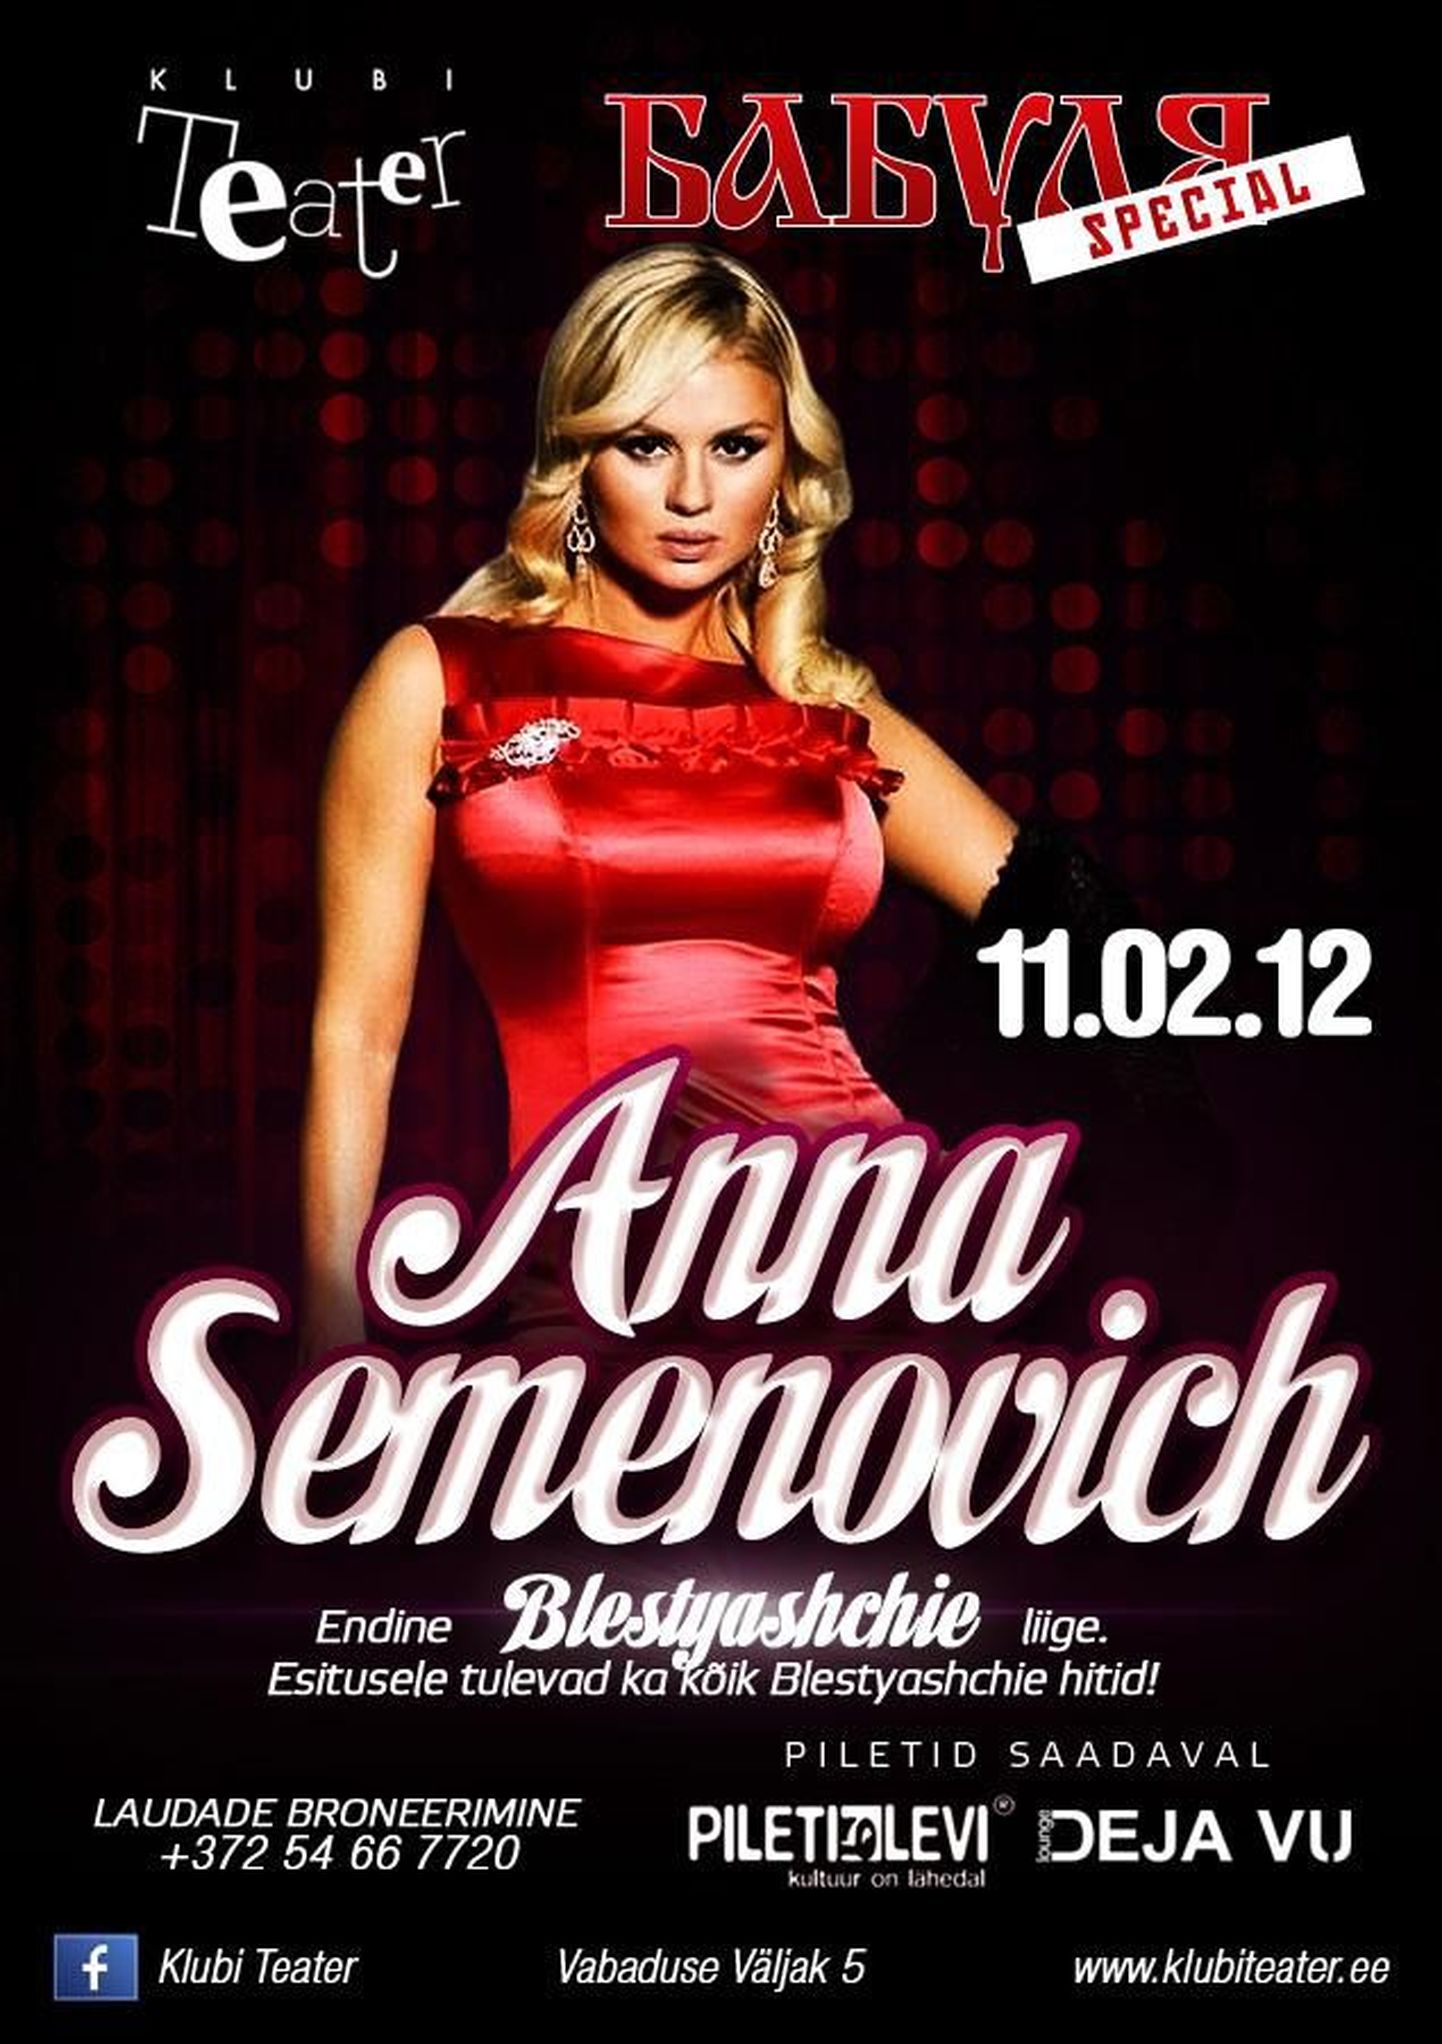 Vene Pamela Anderson Anna Semenovich annab kontserdi Babulja Special peol klubis Teater!